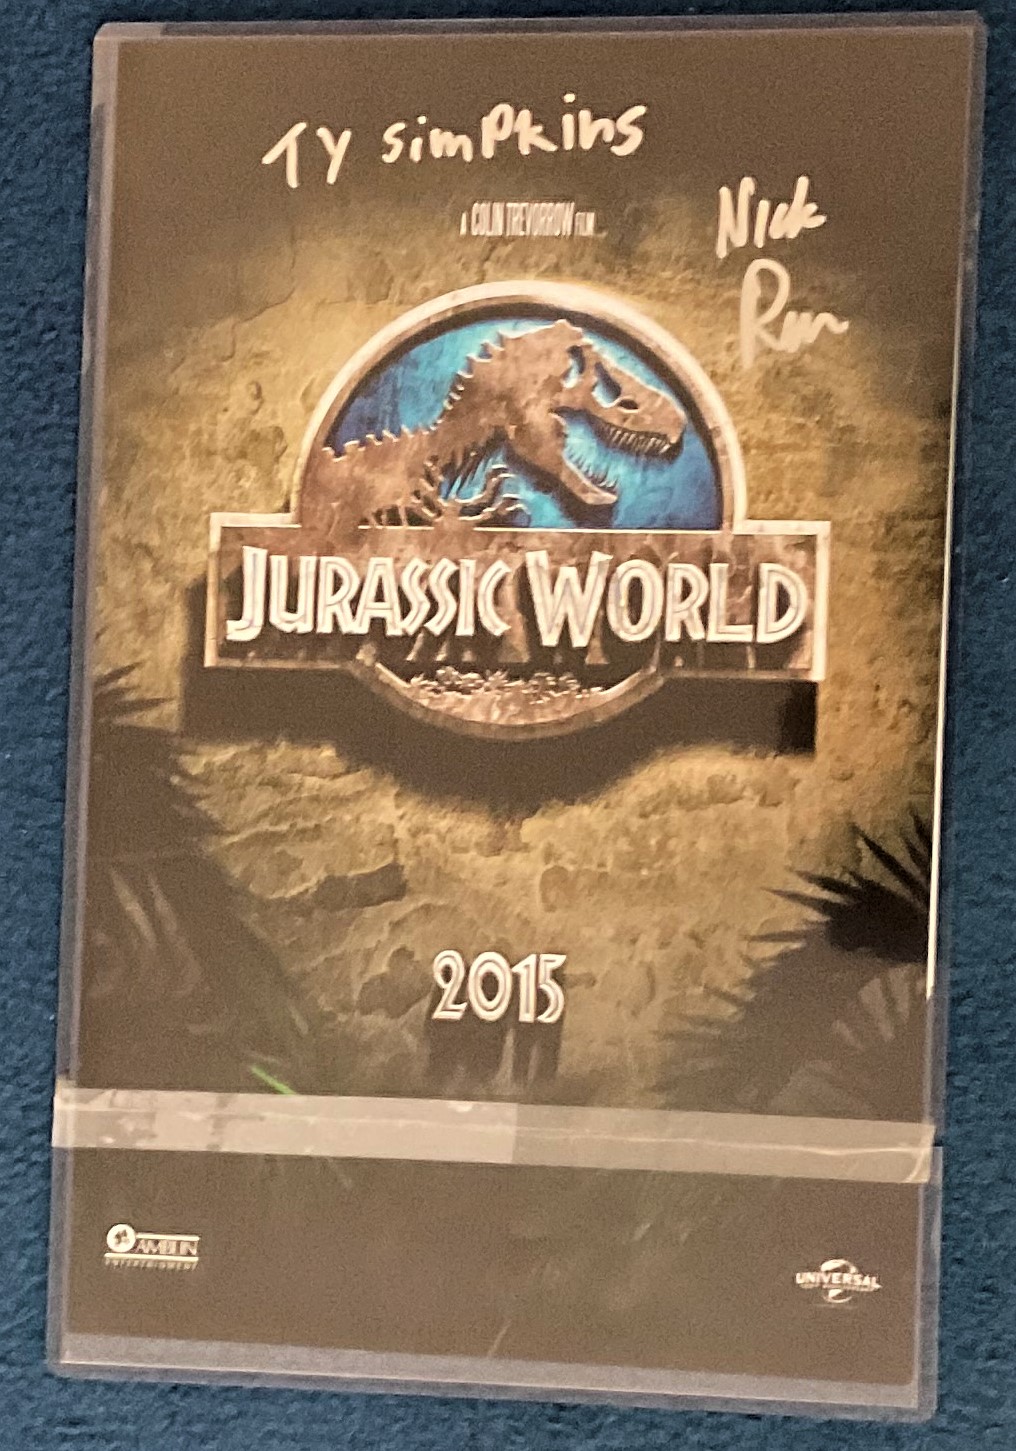 Nick Robinson signed 14x11 Jurassic World 2015 promo photo dedicated. Nicholas John Robinson (born